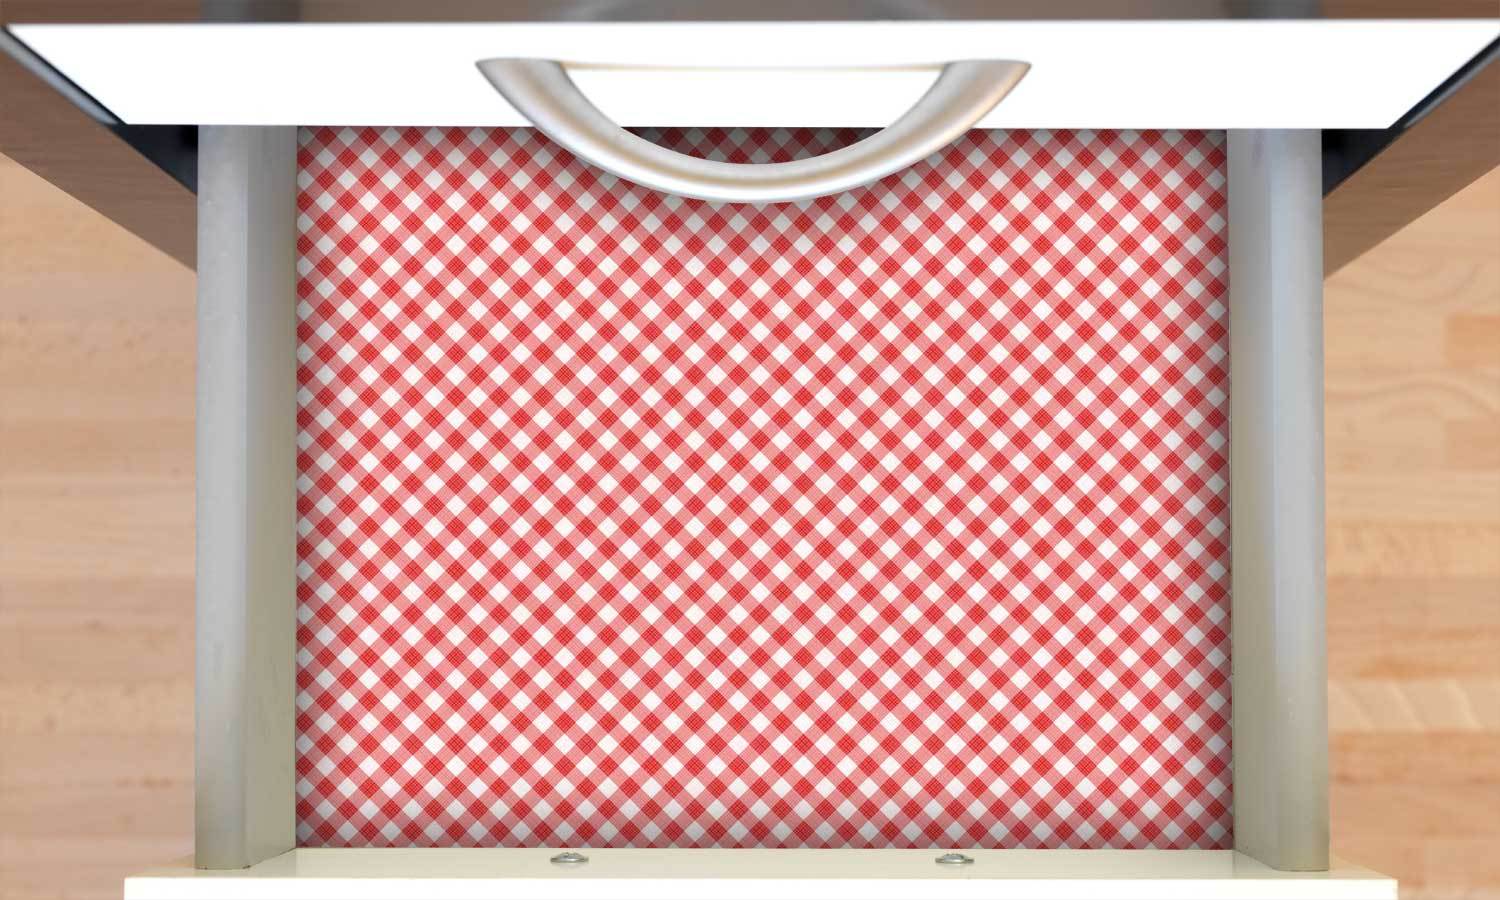 selbstklebende Folie für Möbel- Kariert-Rot PAT092 - life-decor.de